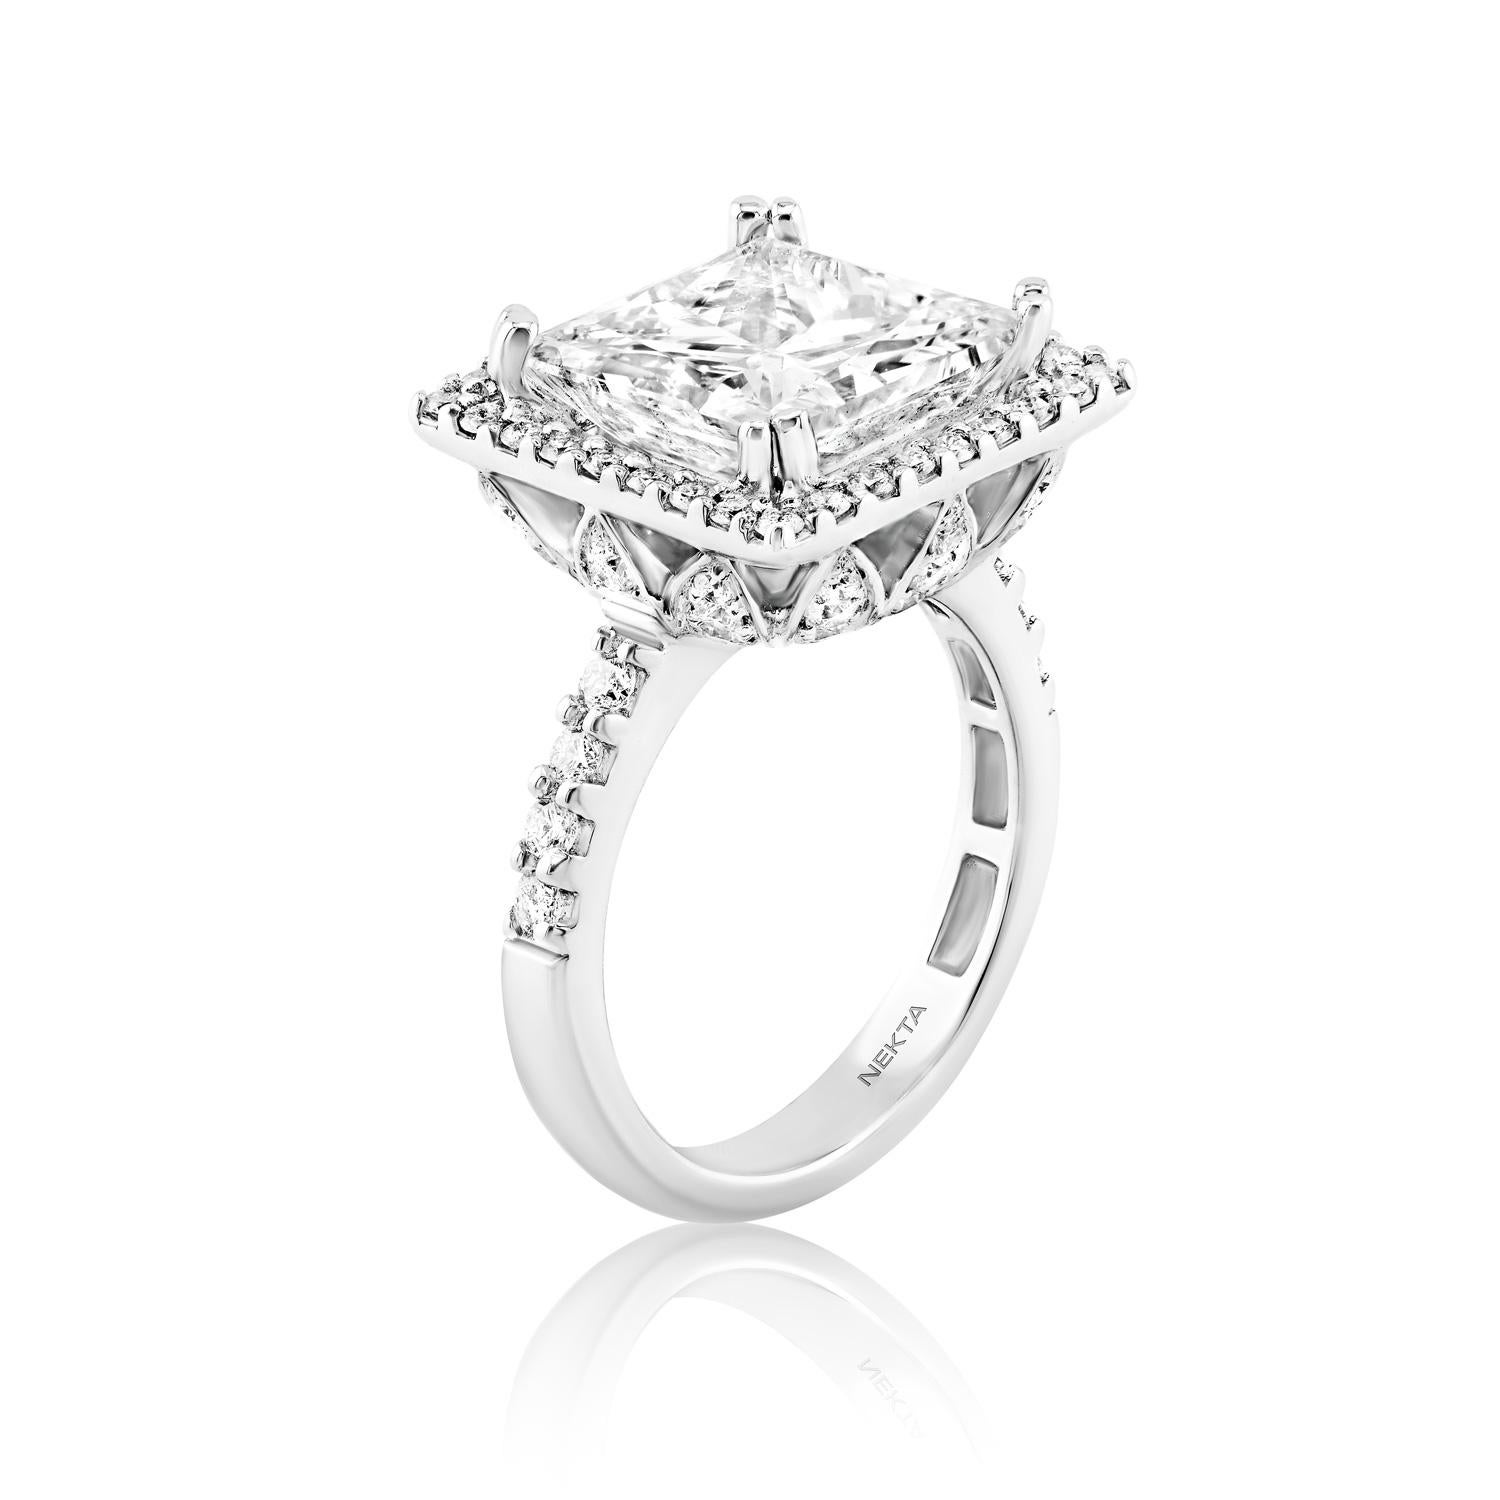 4 carat princess cut diamond ring